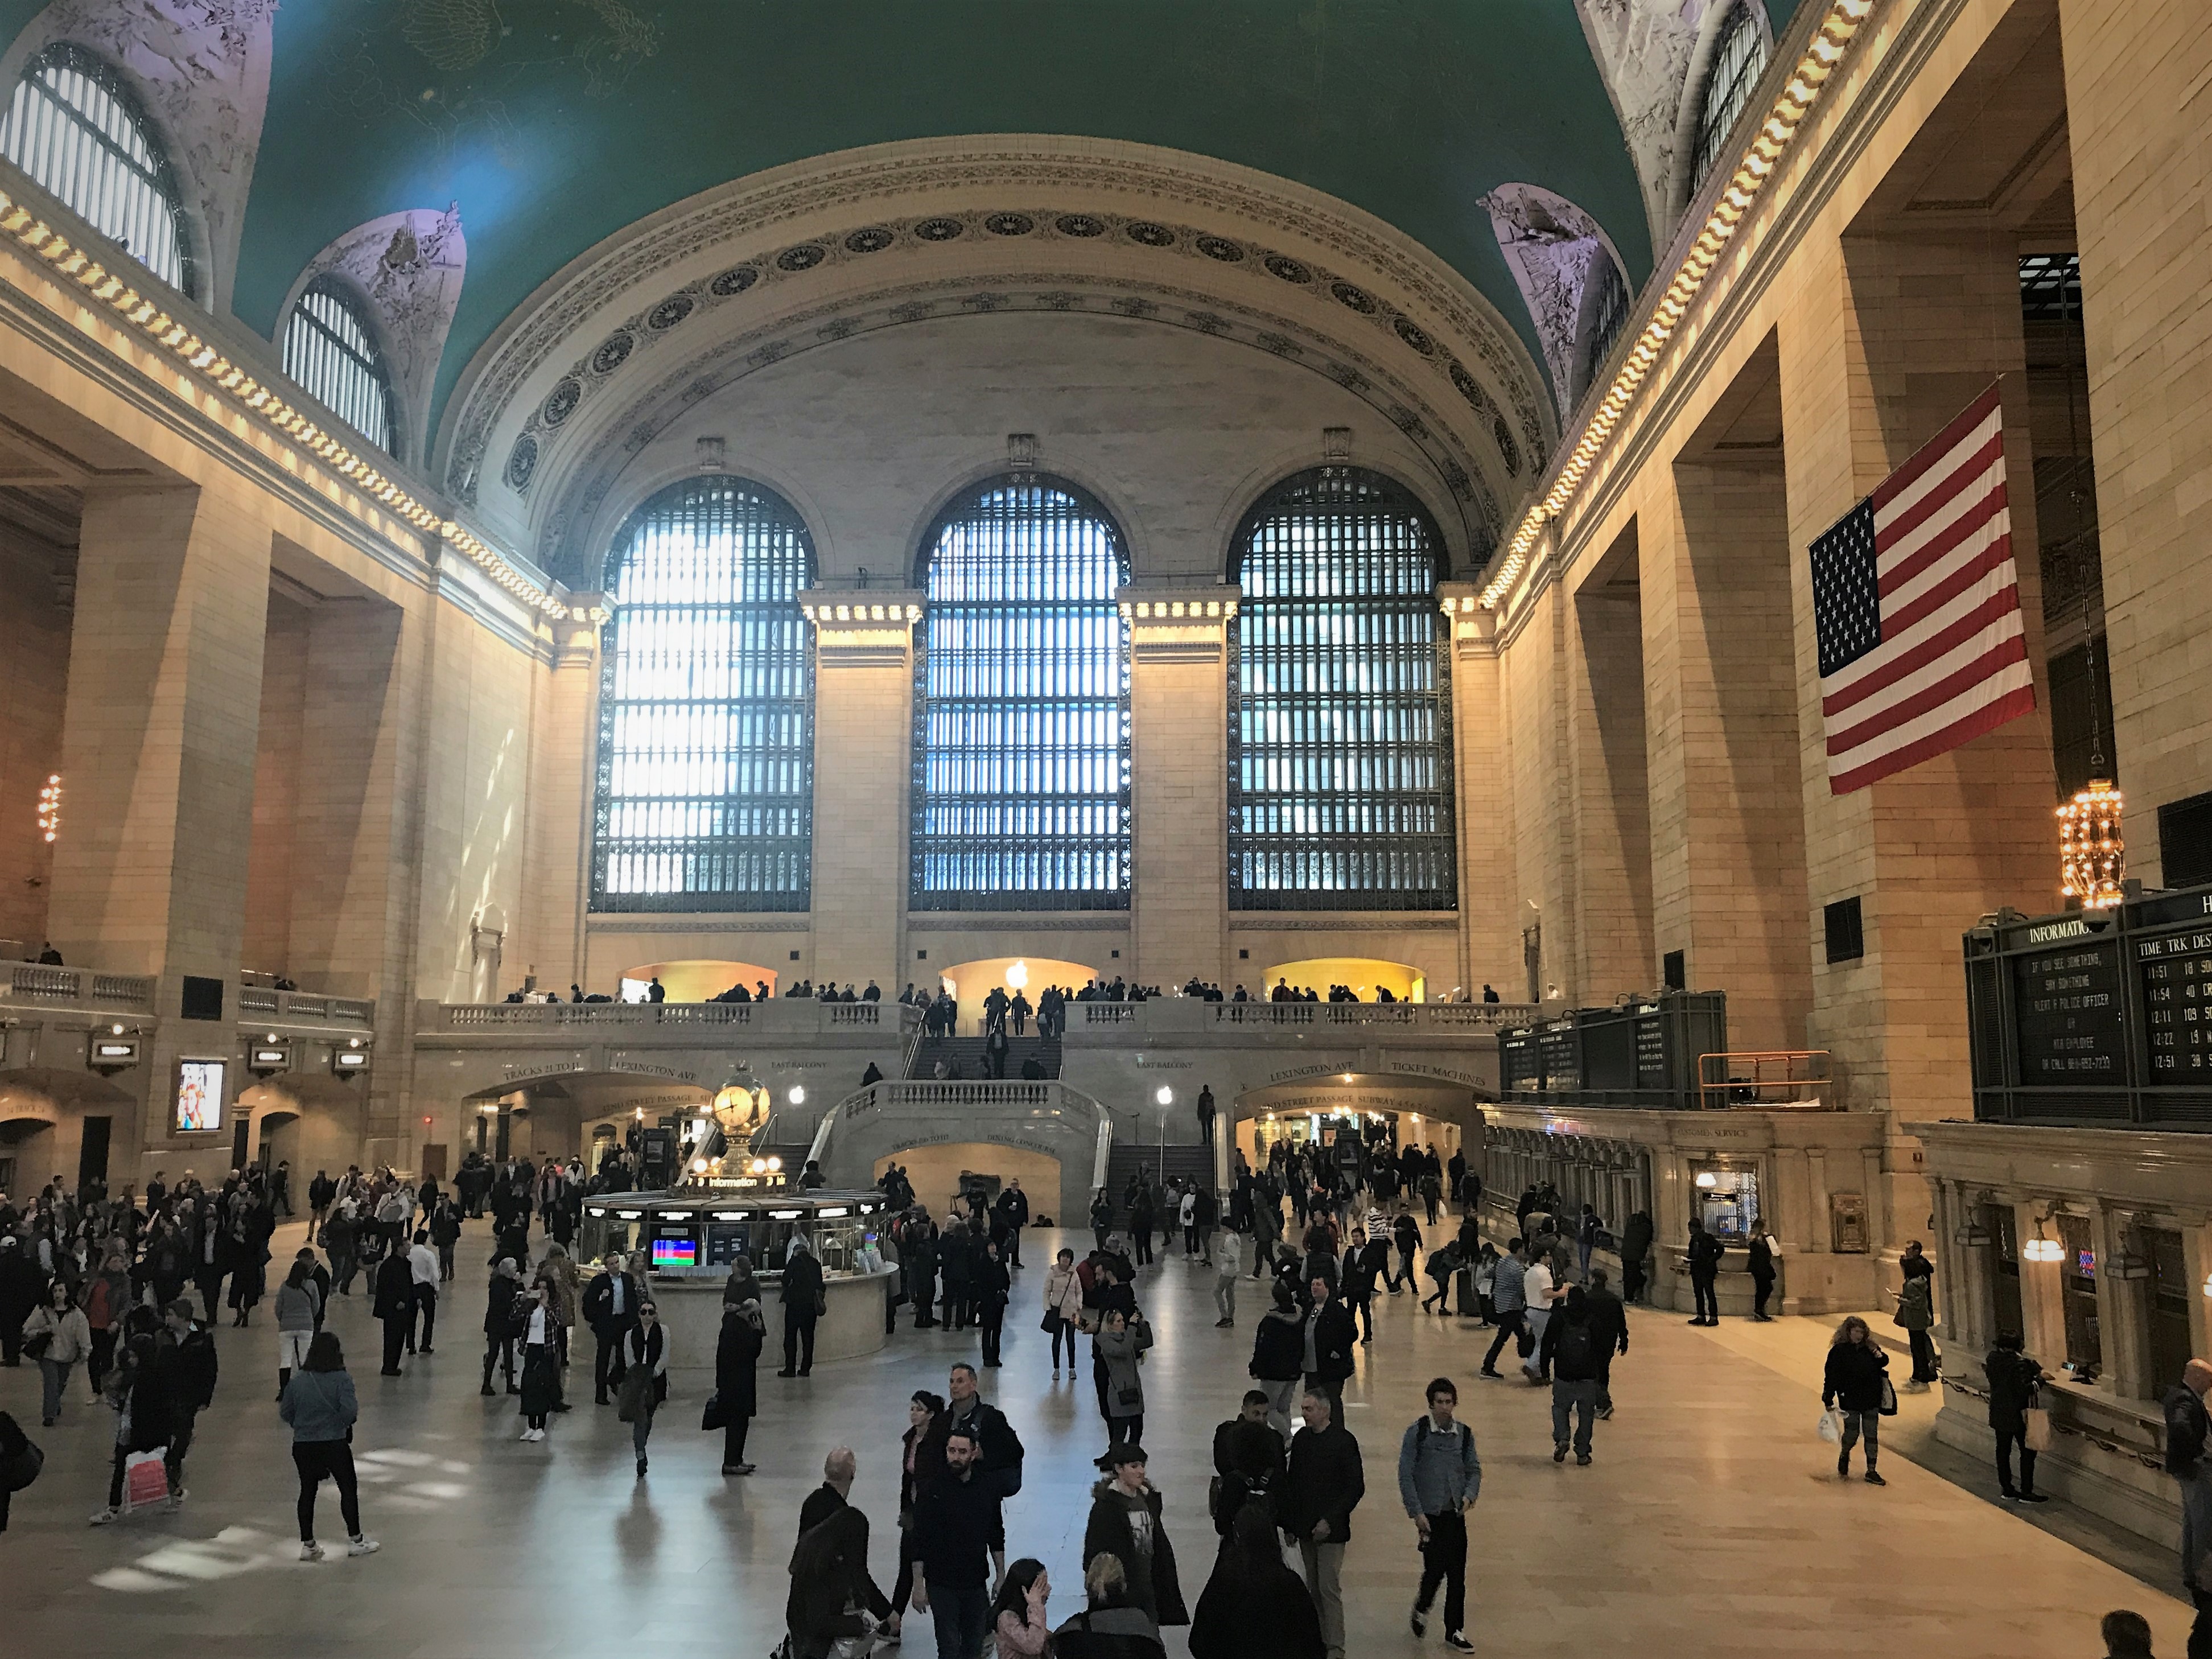 Inside New York's Grand Central Station